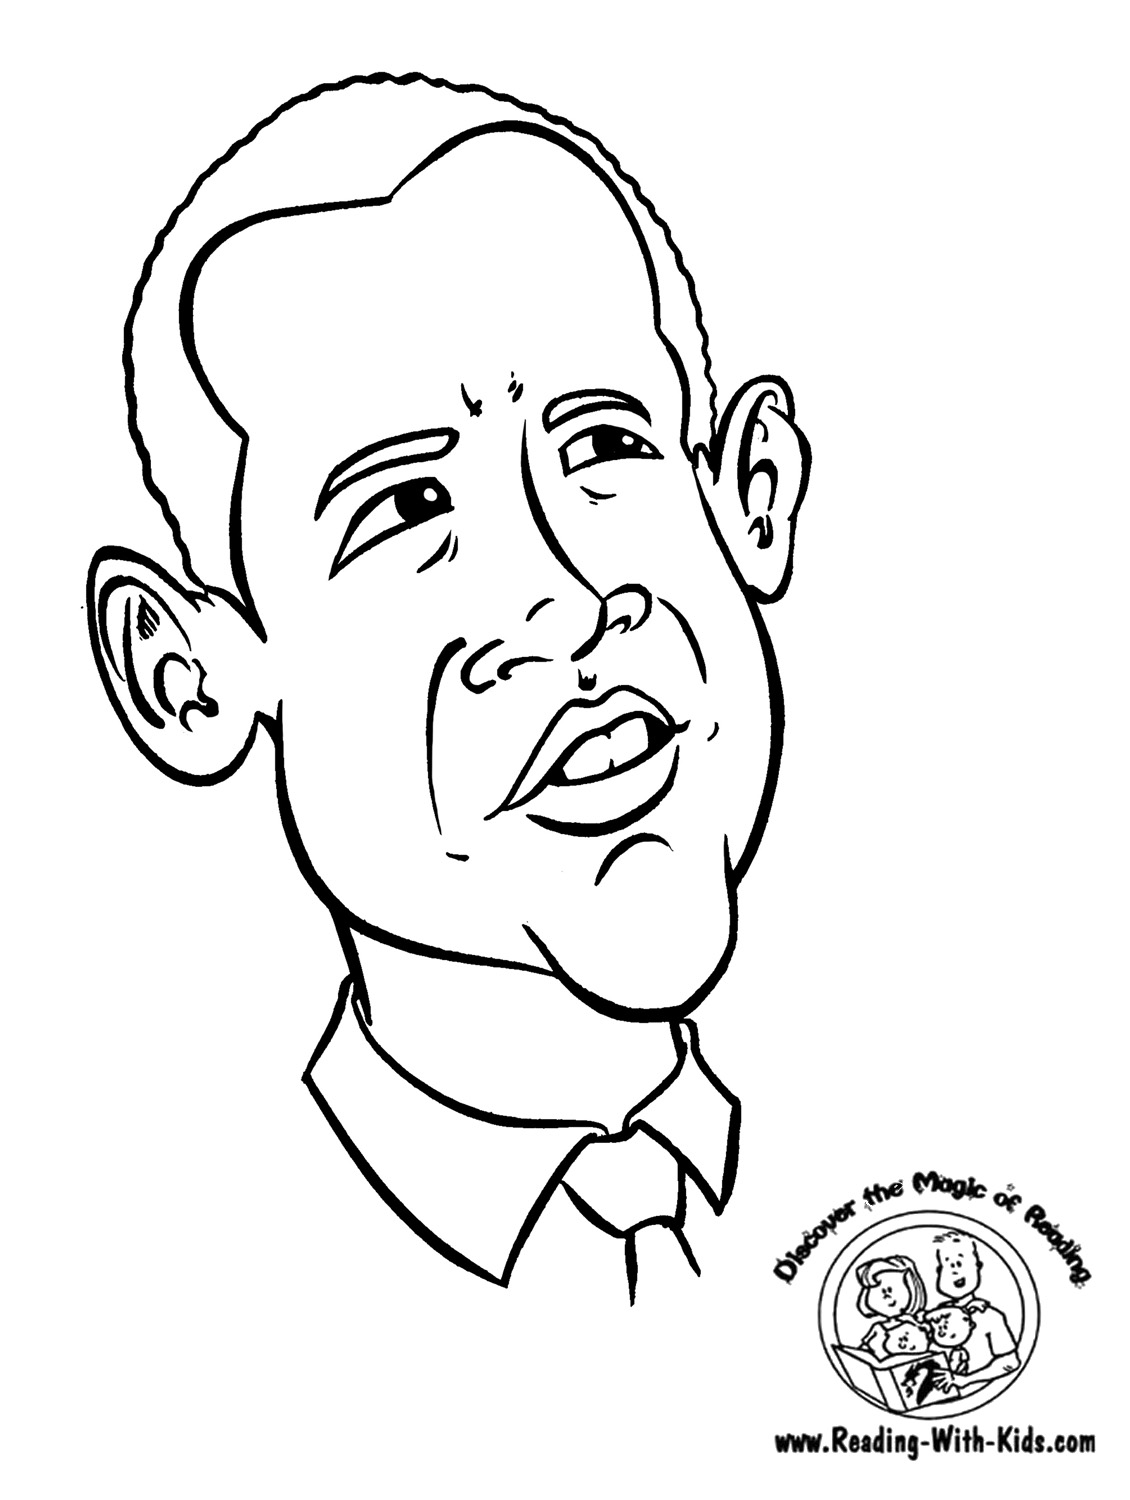 George Washington Coloring Page Barack Obama Coloring Page